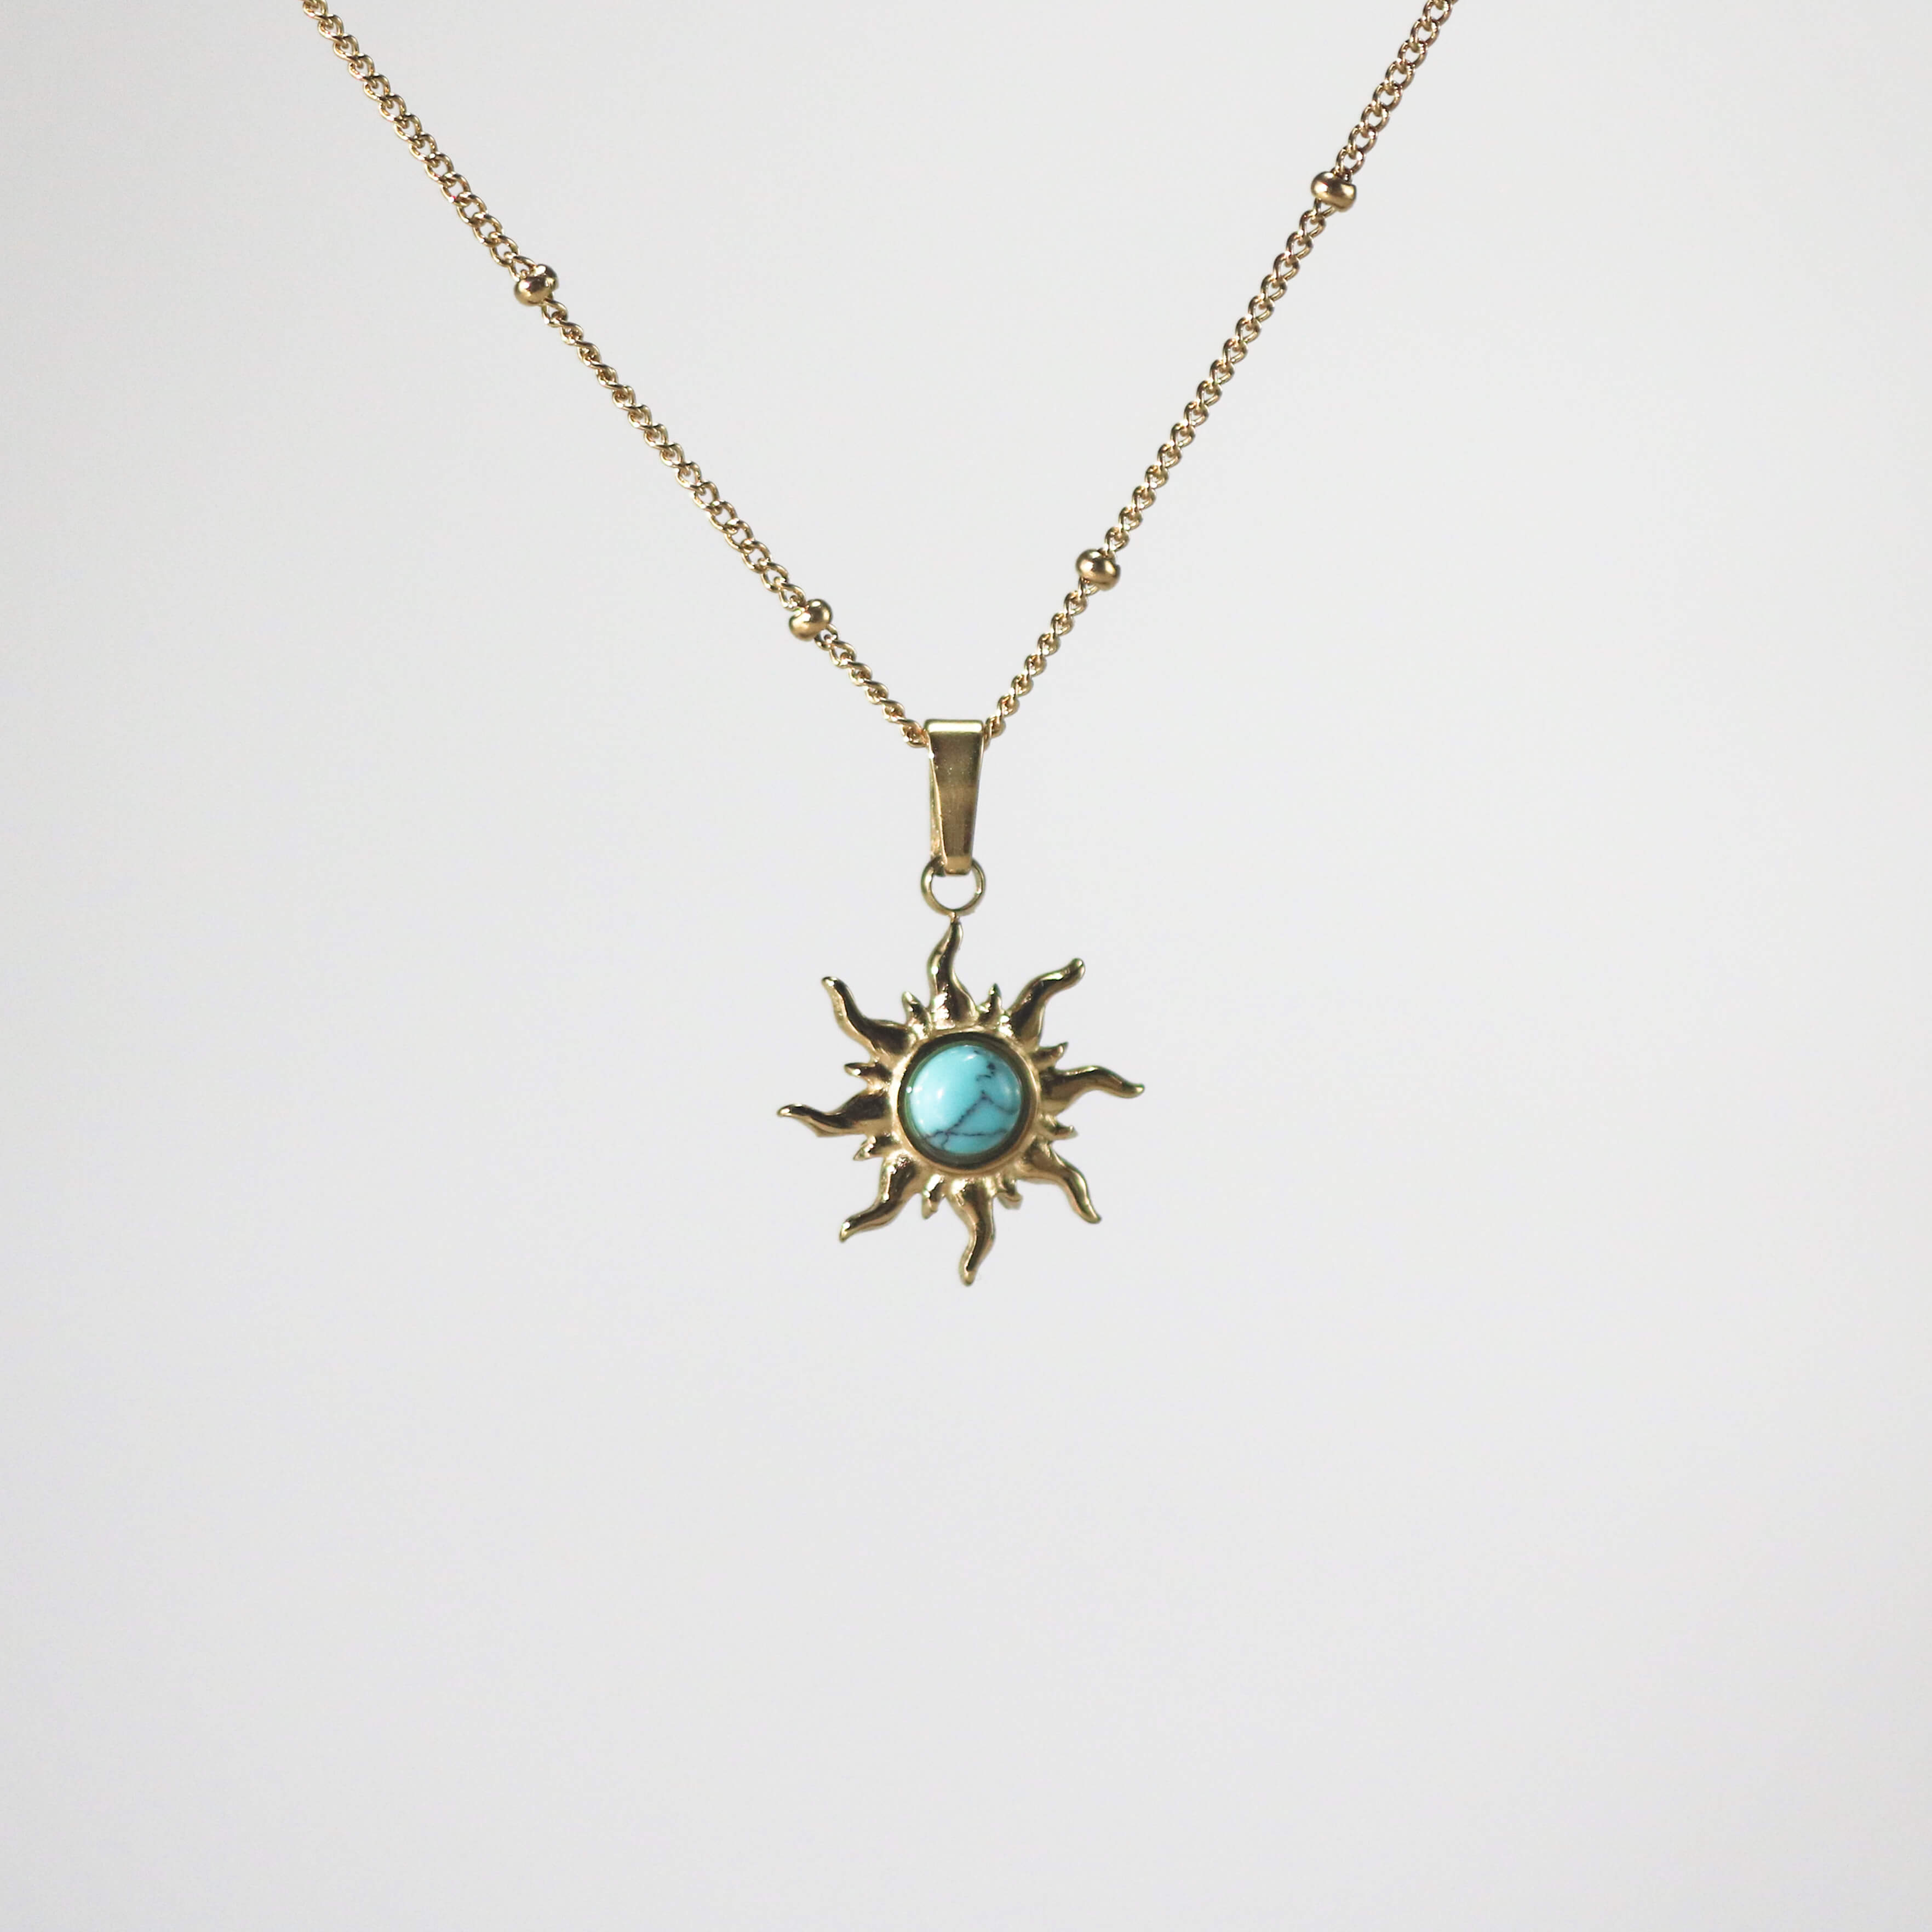 Meideya Jewelry Turquoise sun pendant necklace